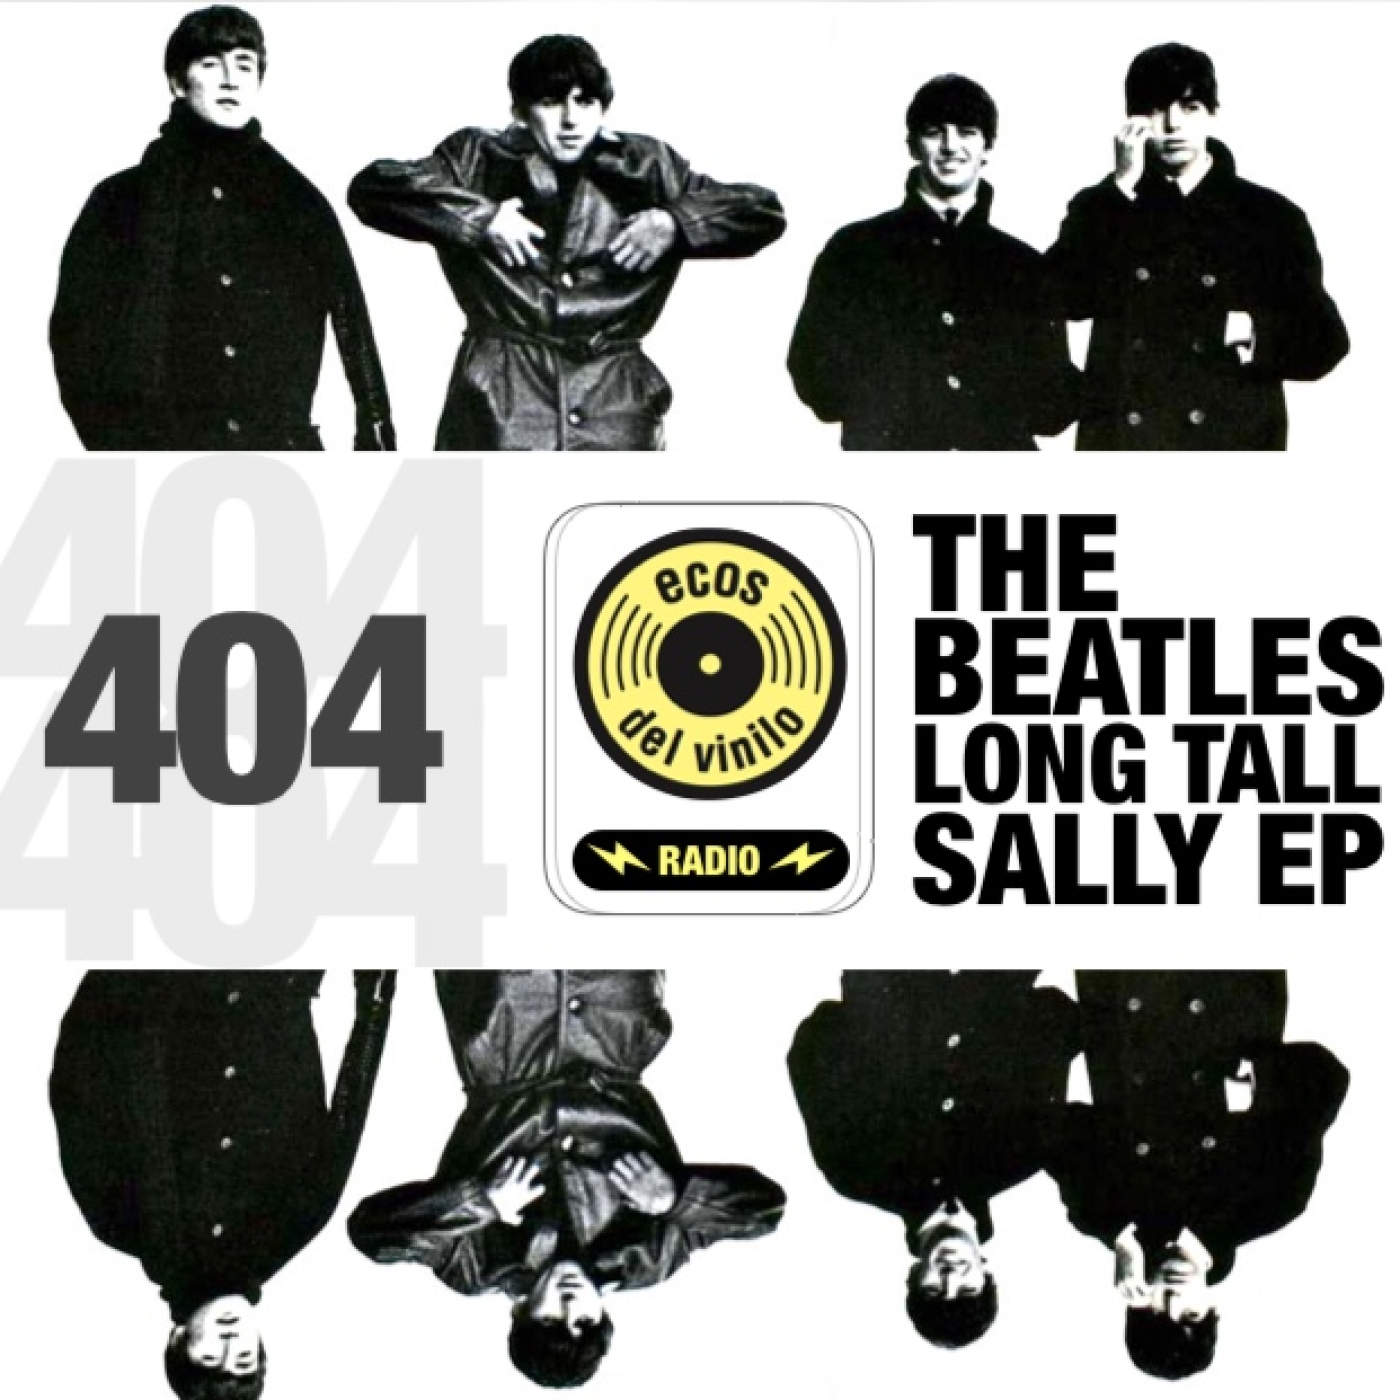 The Beatles / Long Tall Sally EP | Programa 404 – Ecos del Vinilo Radio